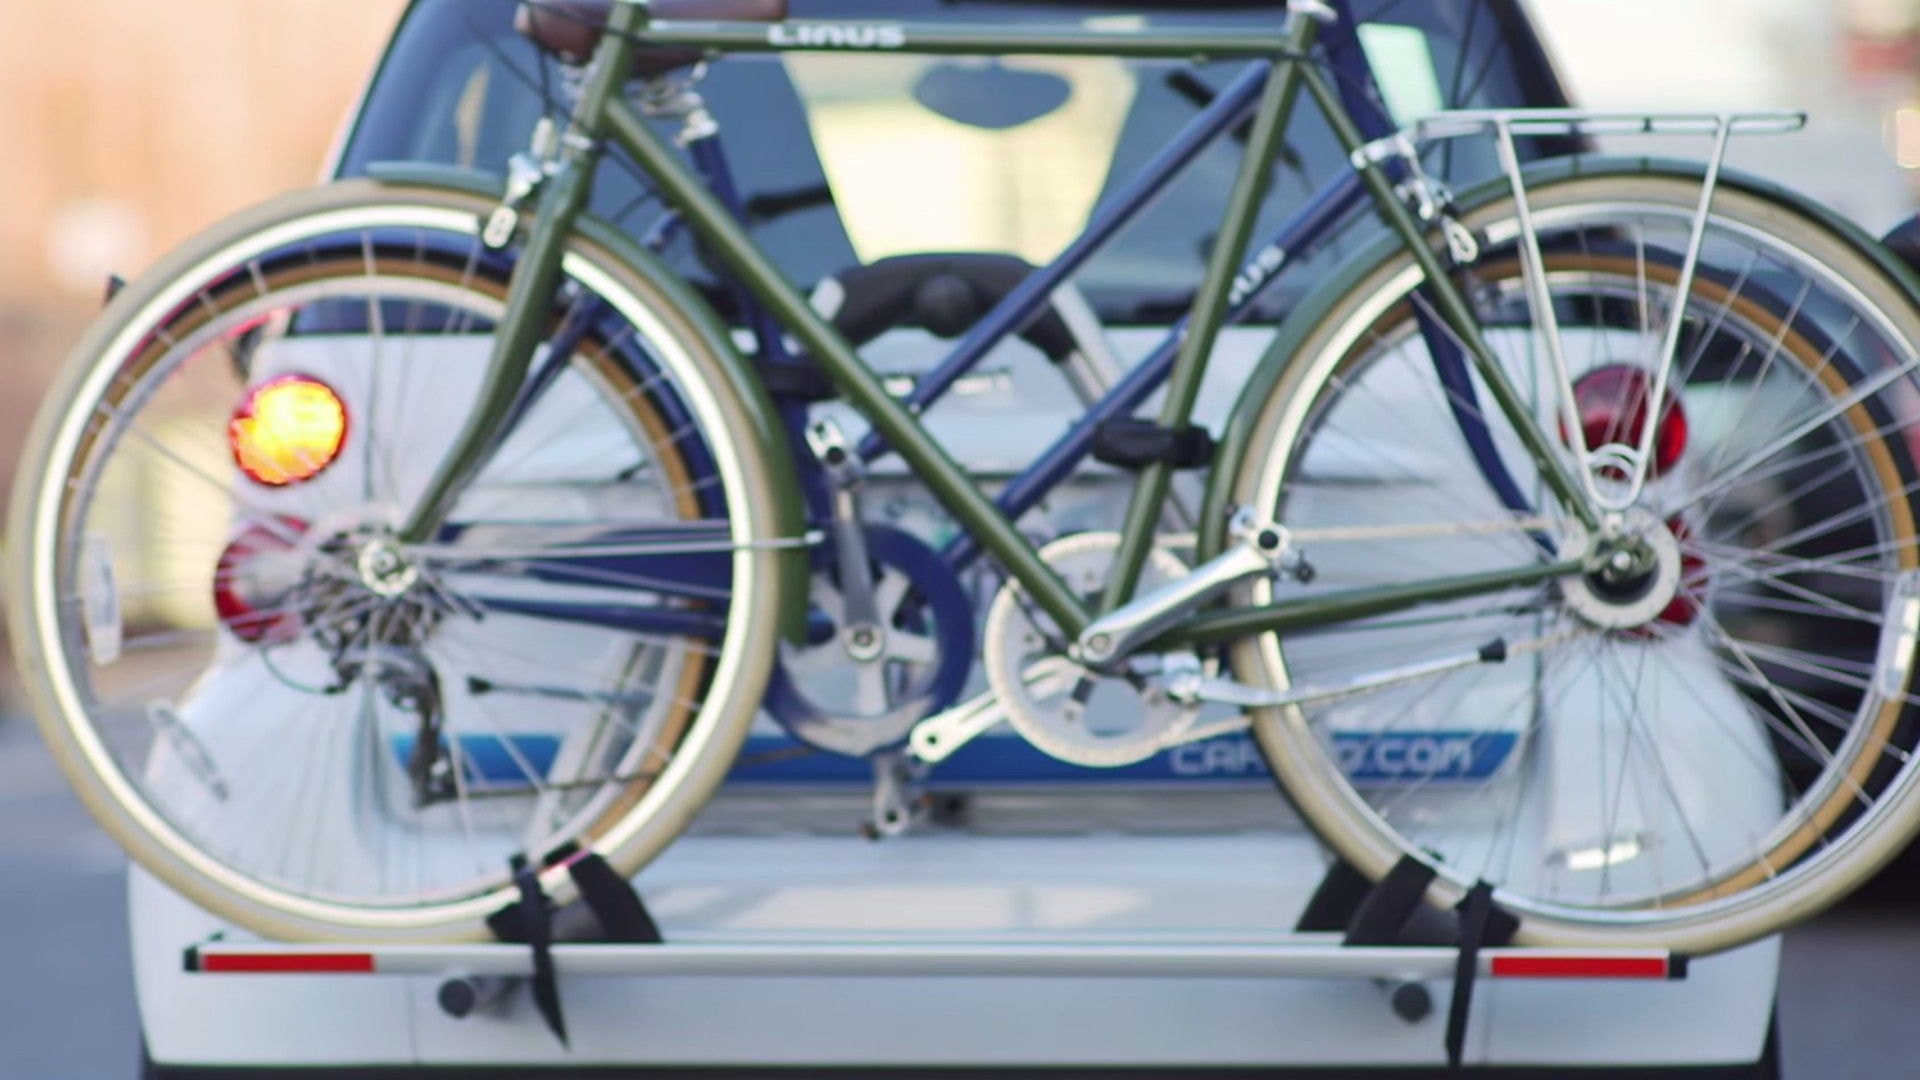 Car2Go offering bike racks in Portland